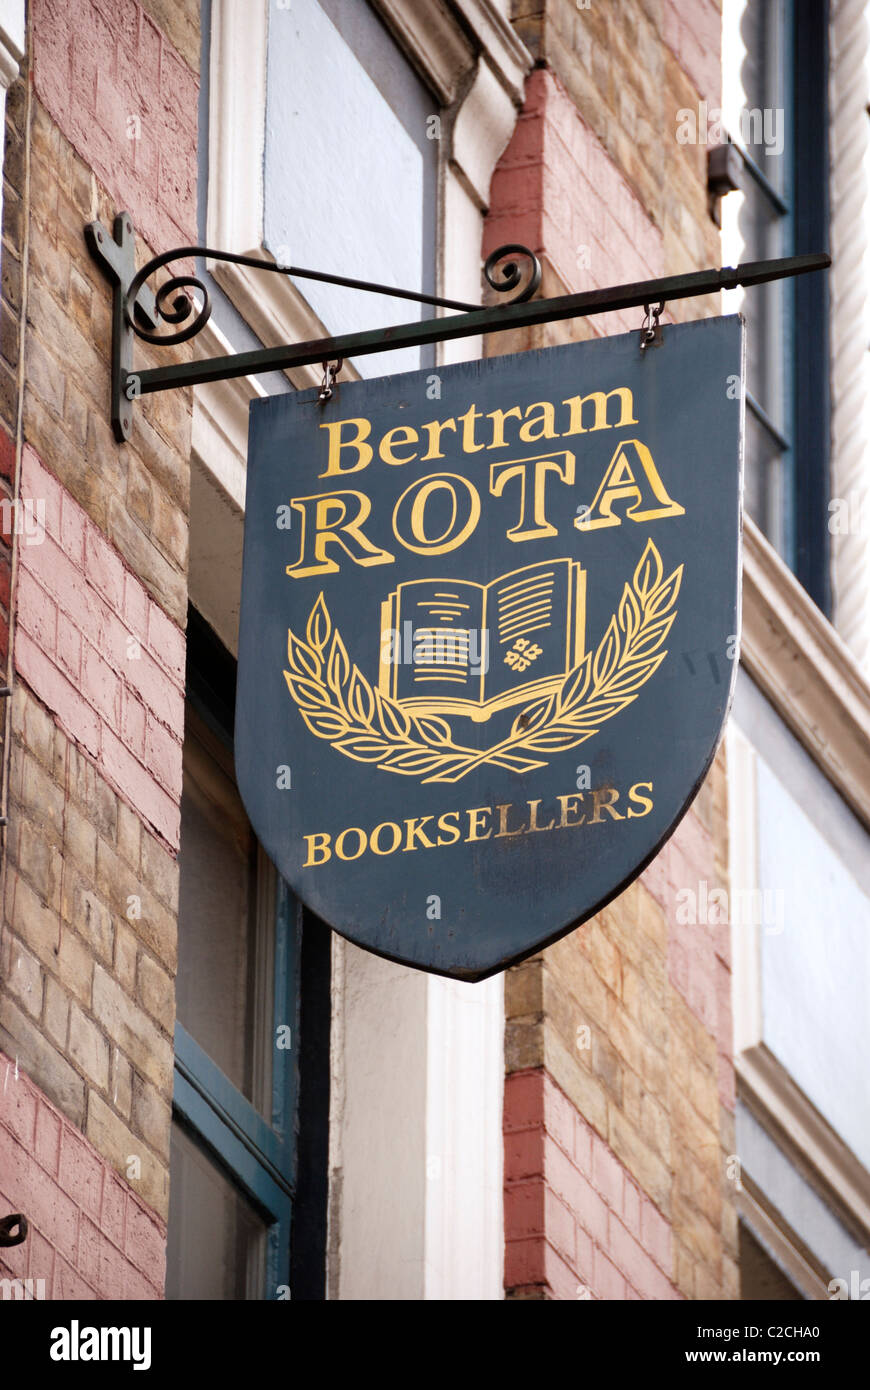 Bertram Rota Ltd Booksellers in Long Acre, Covent Garden, London, England Stock Photo